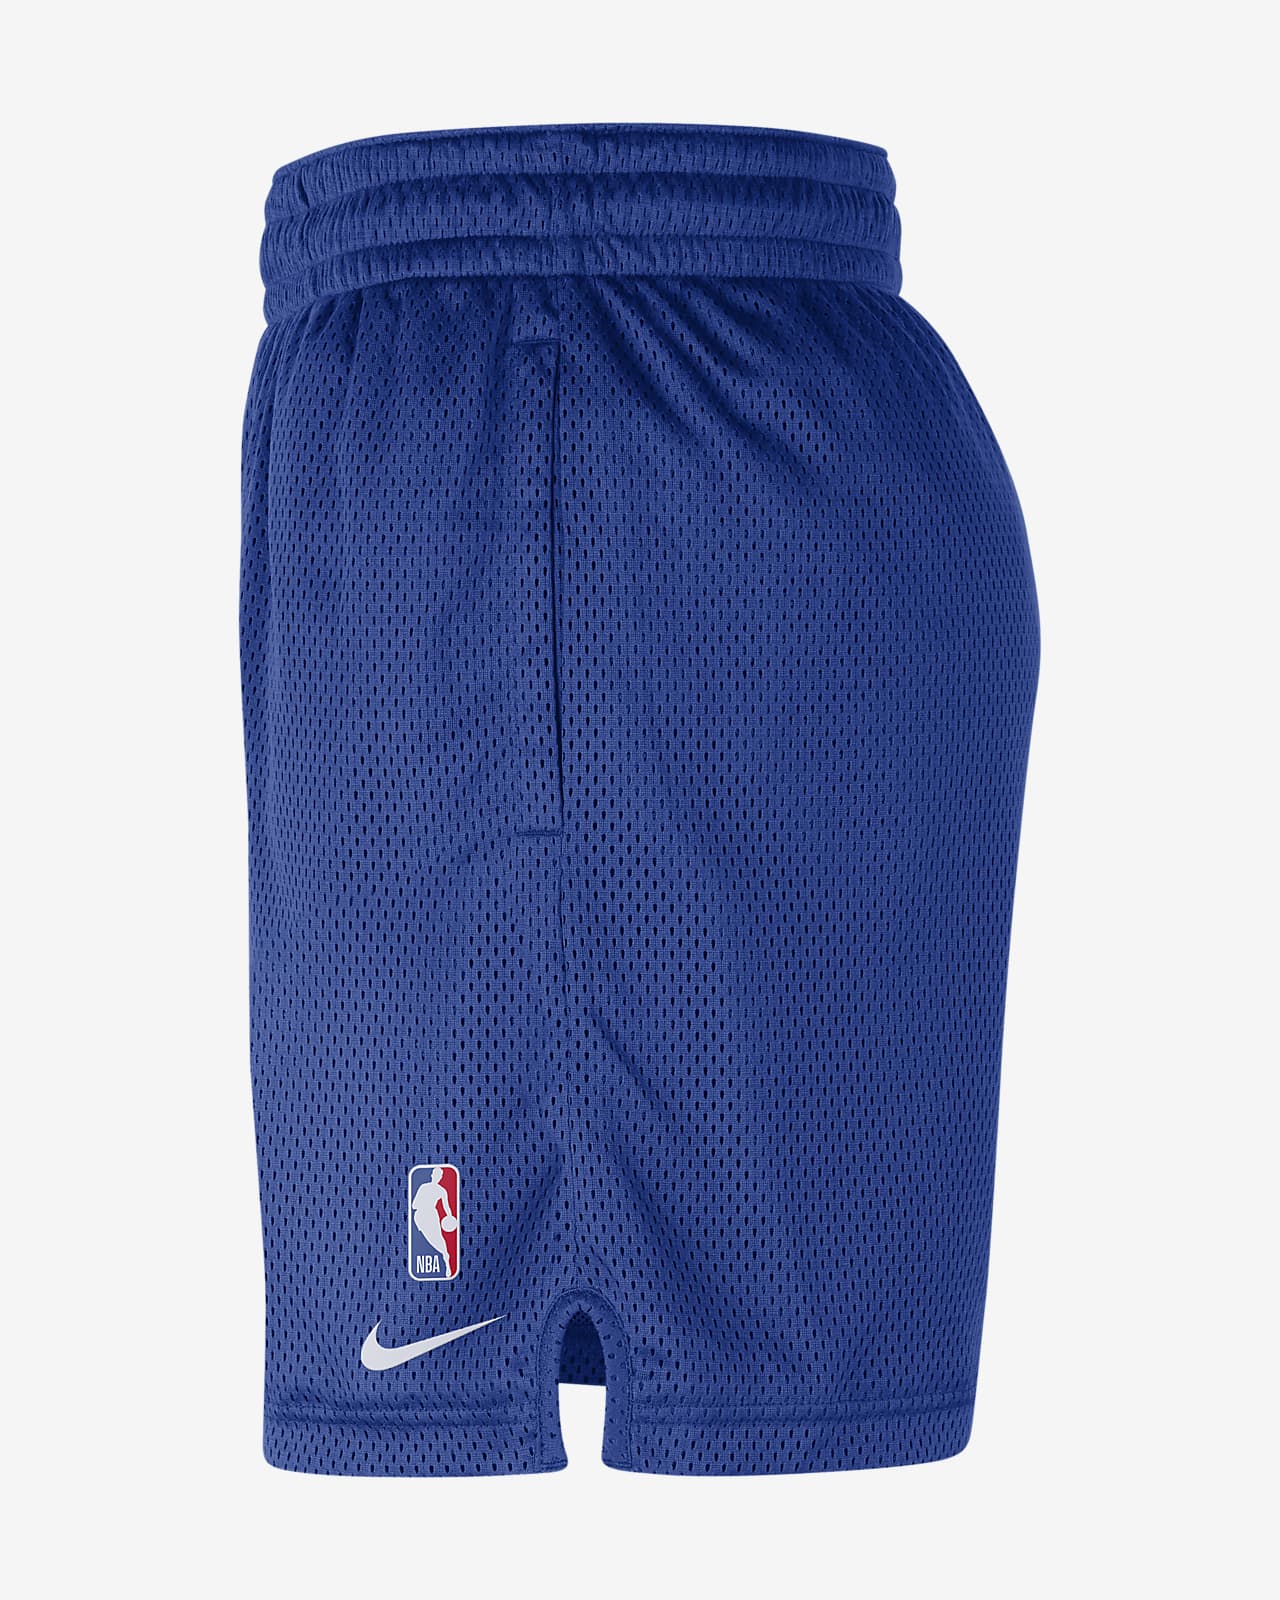 nba men's basketball shorts